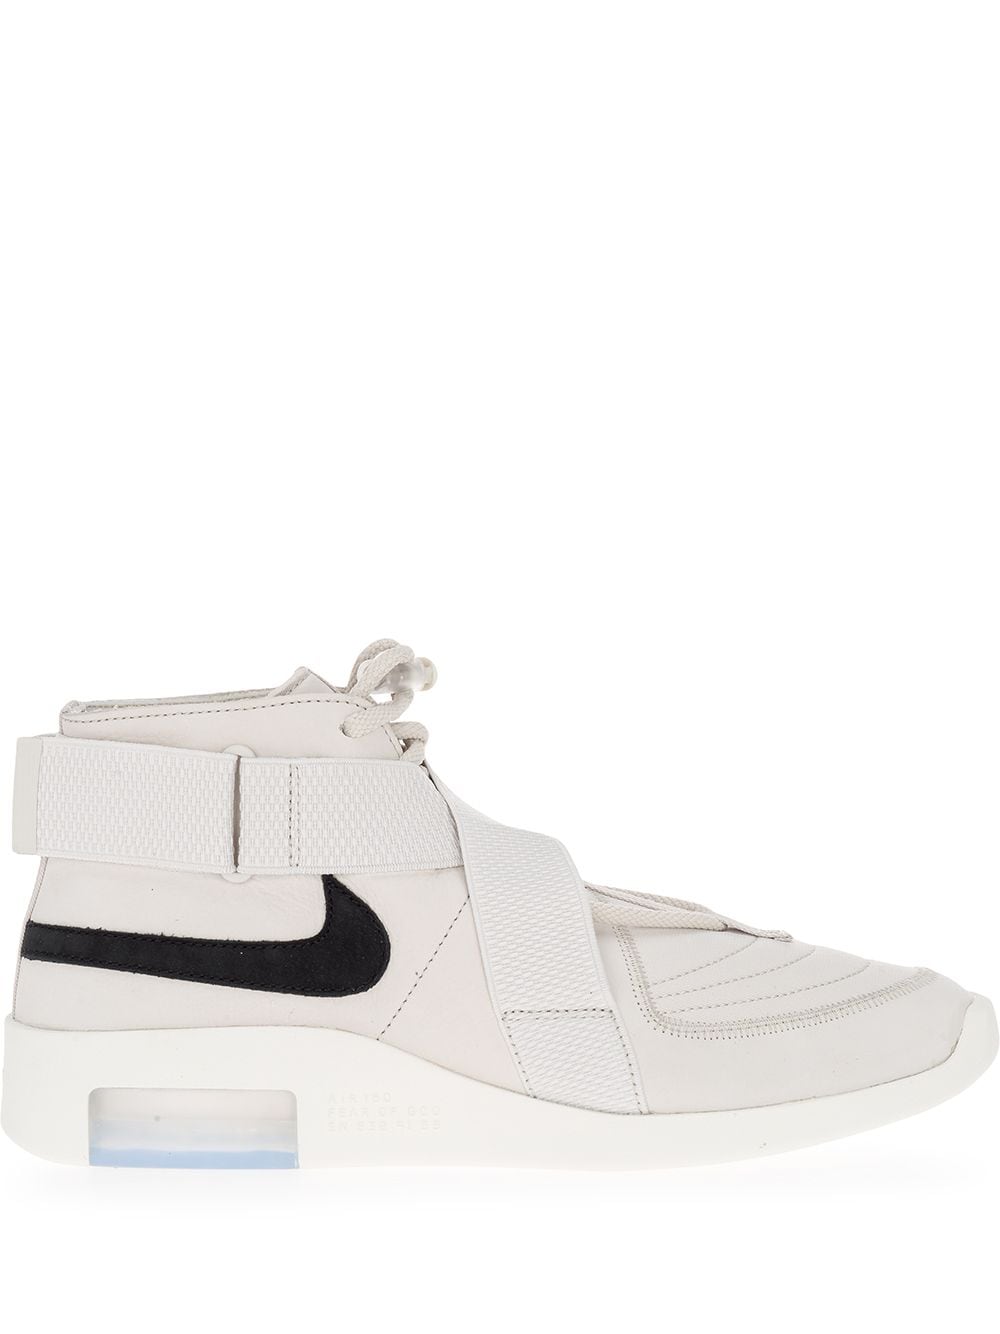 Nike Air Fear Of God Raid "Light Bone" sneakers - White von Nike